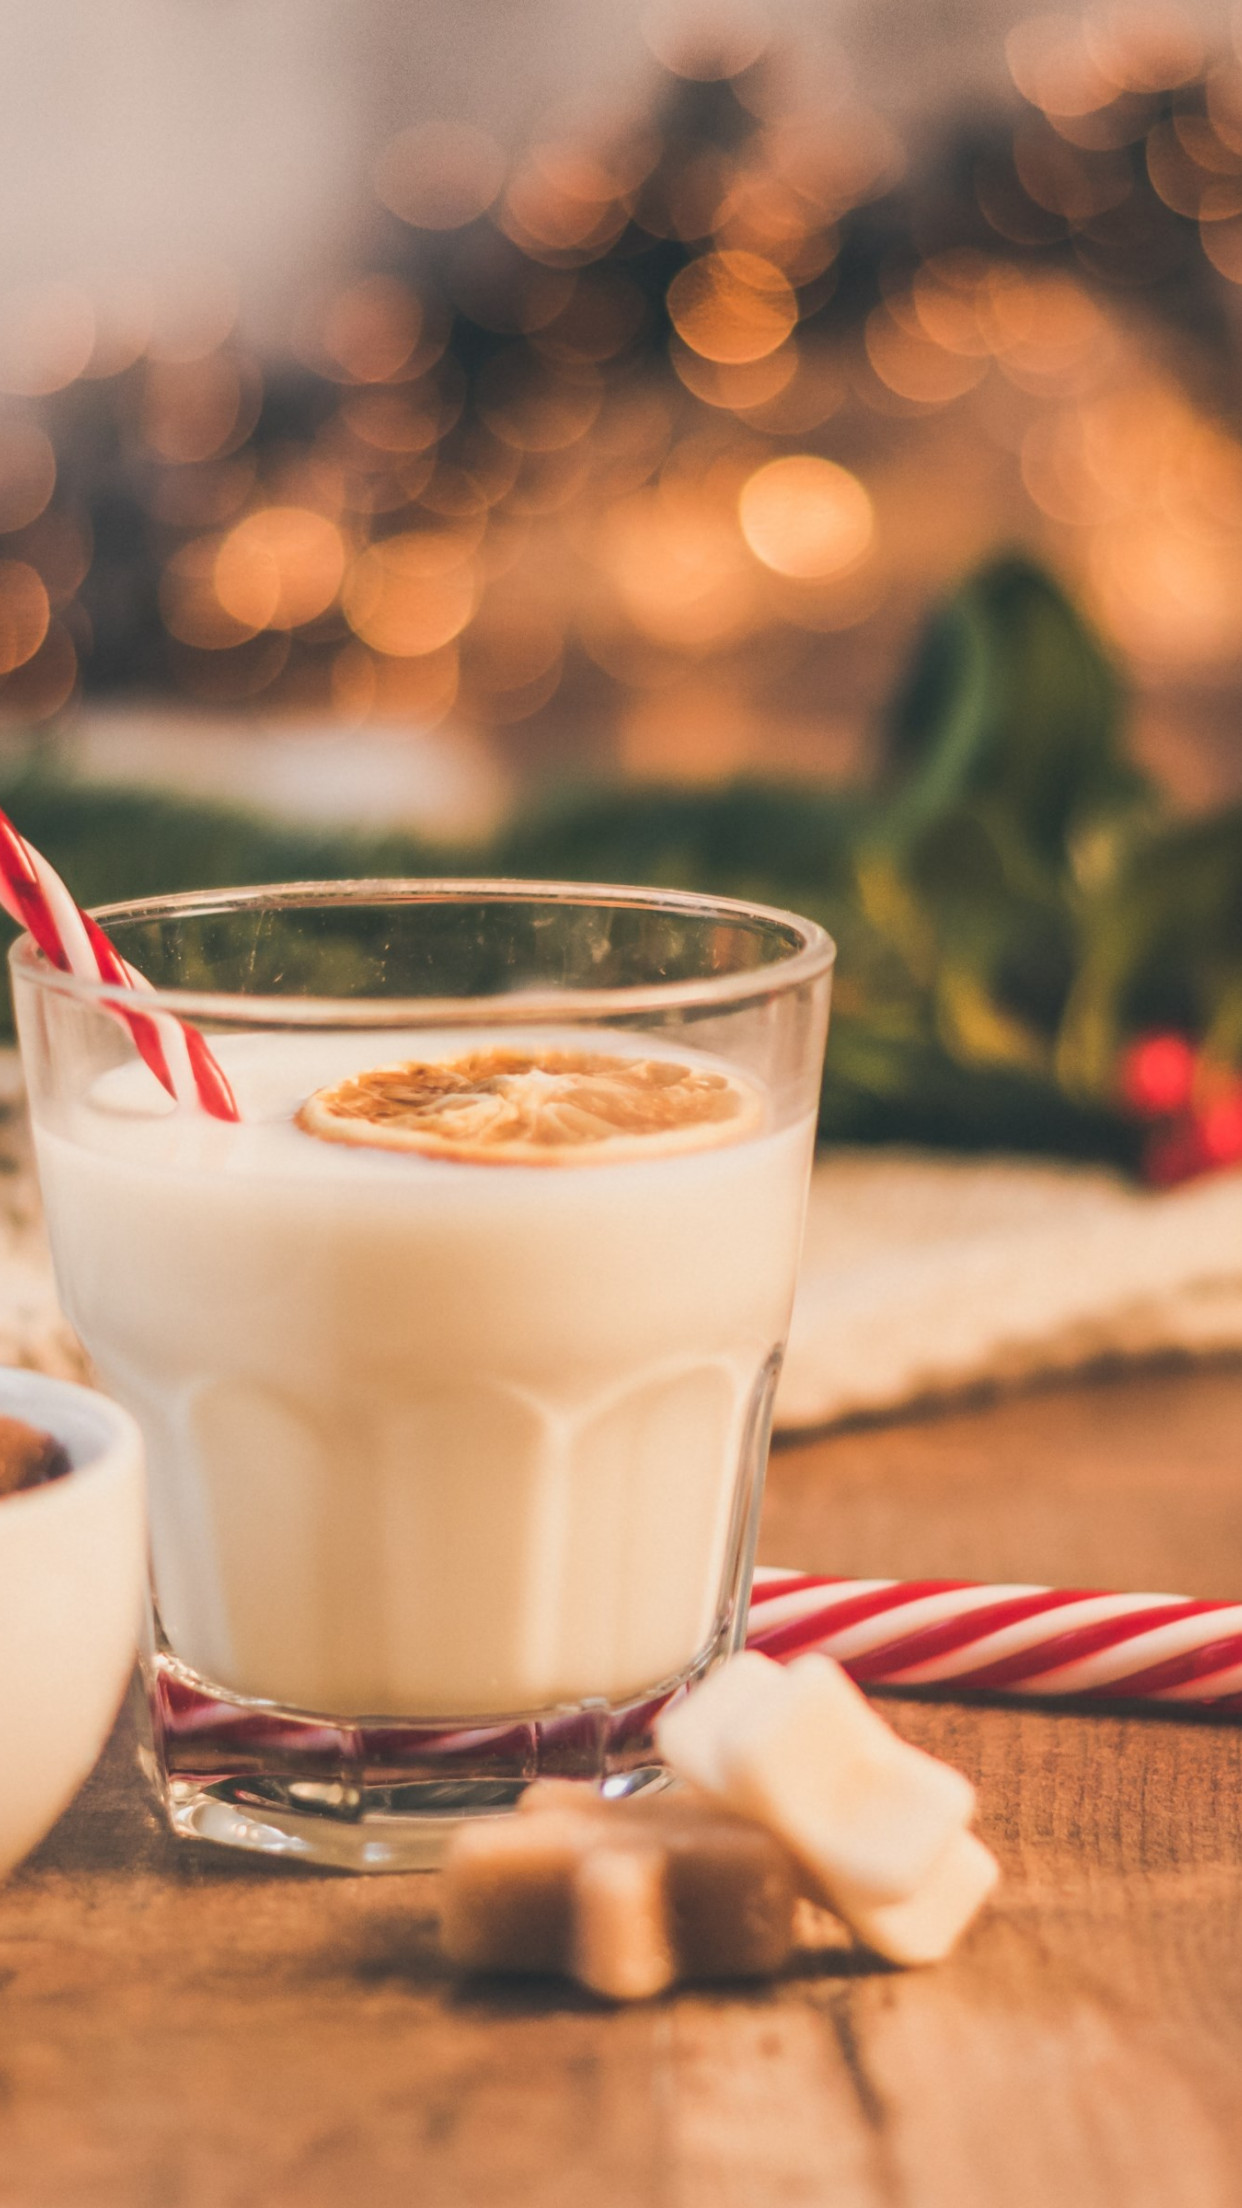 Seasonal Christmas sweets and cup of milk wallpaper 1242x2208